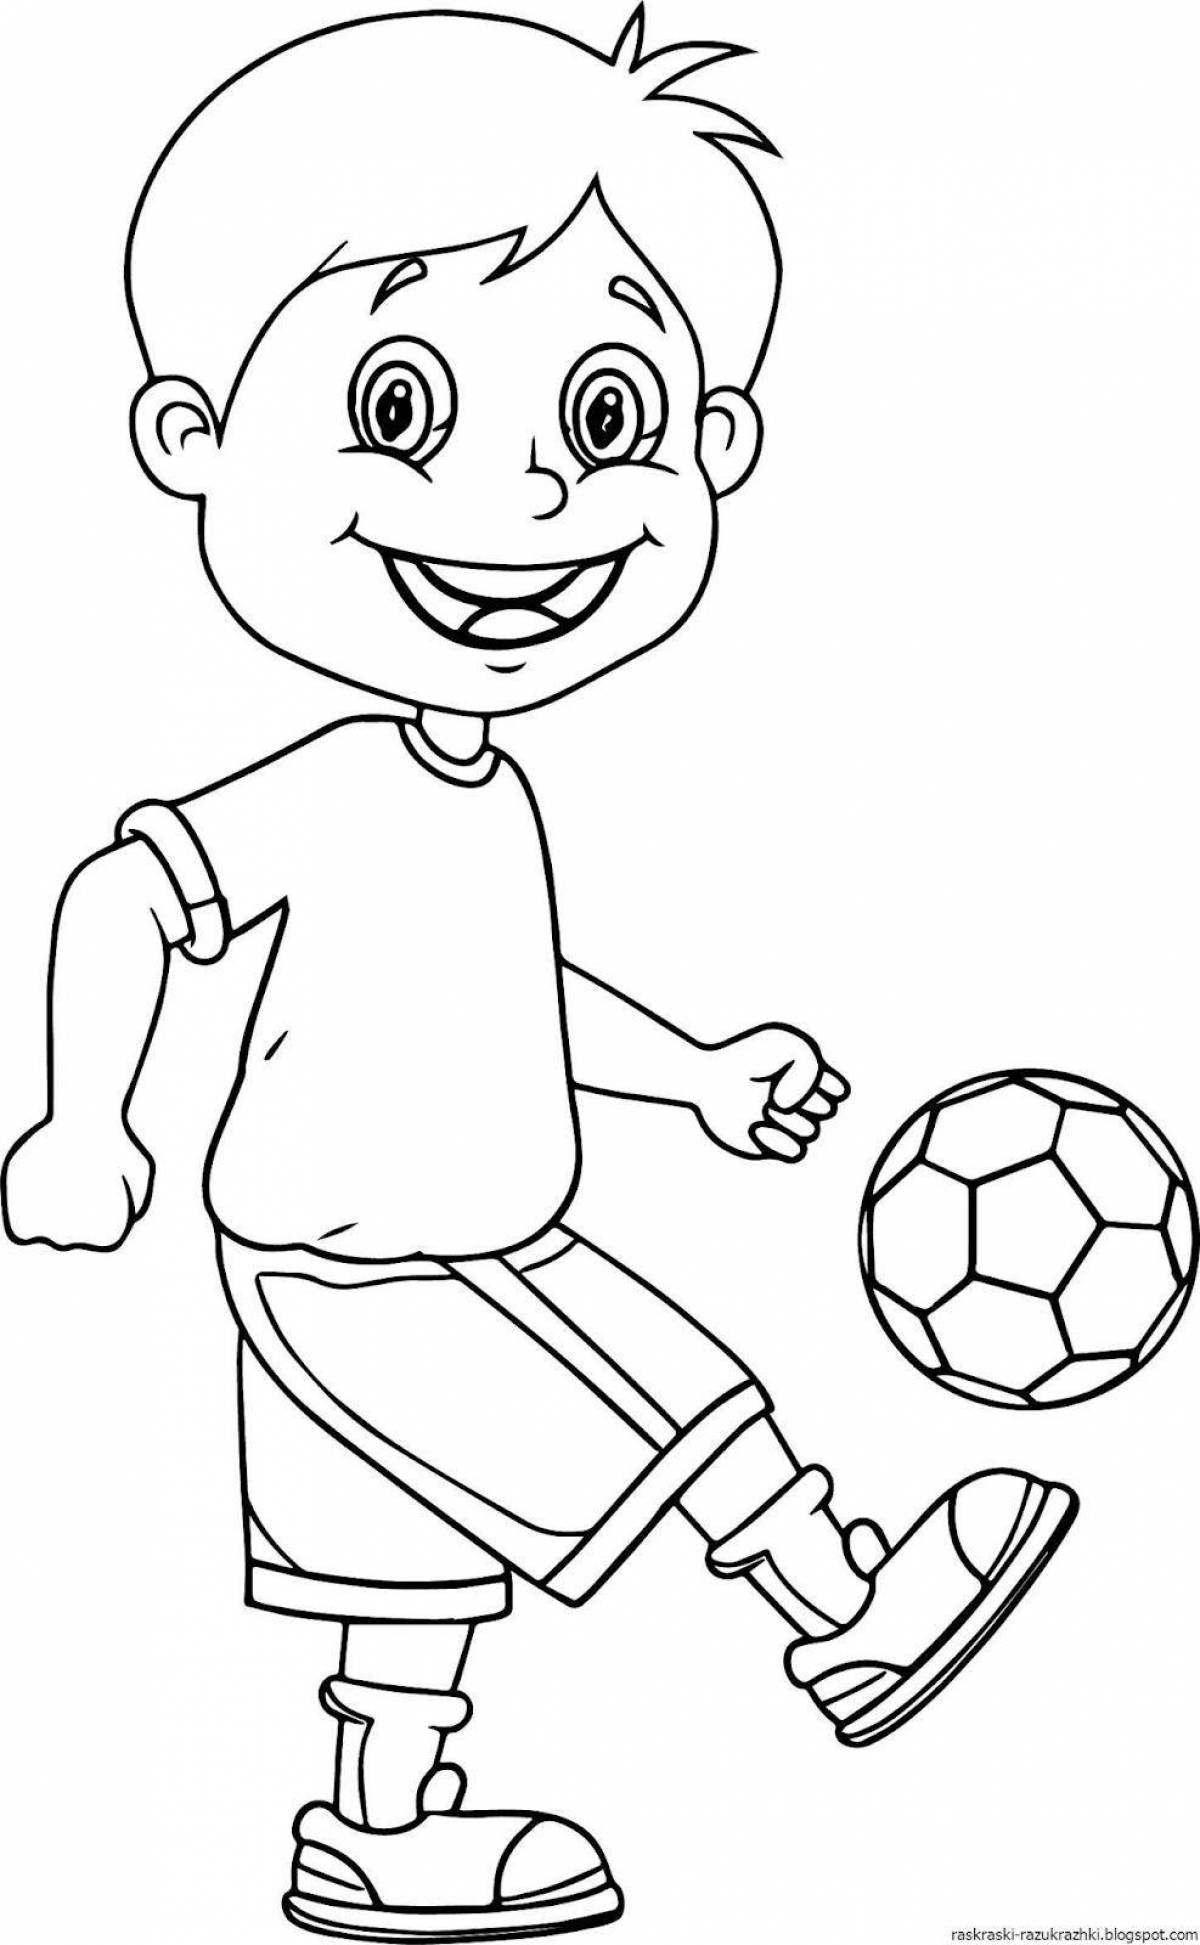 Fun football coloring book for kids